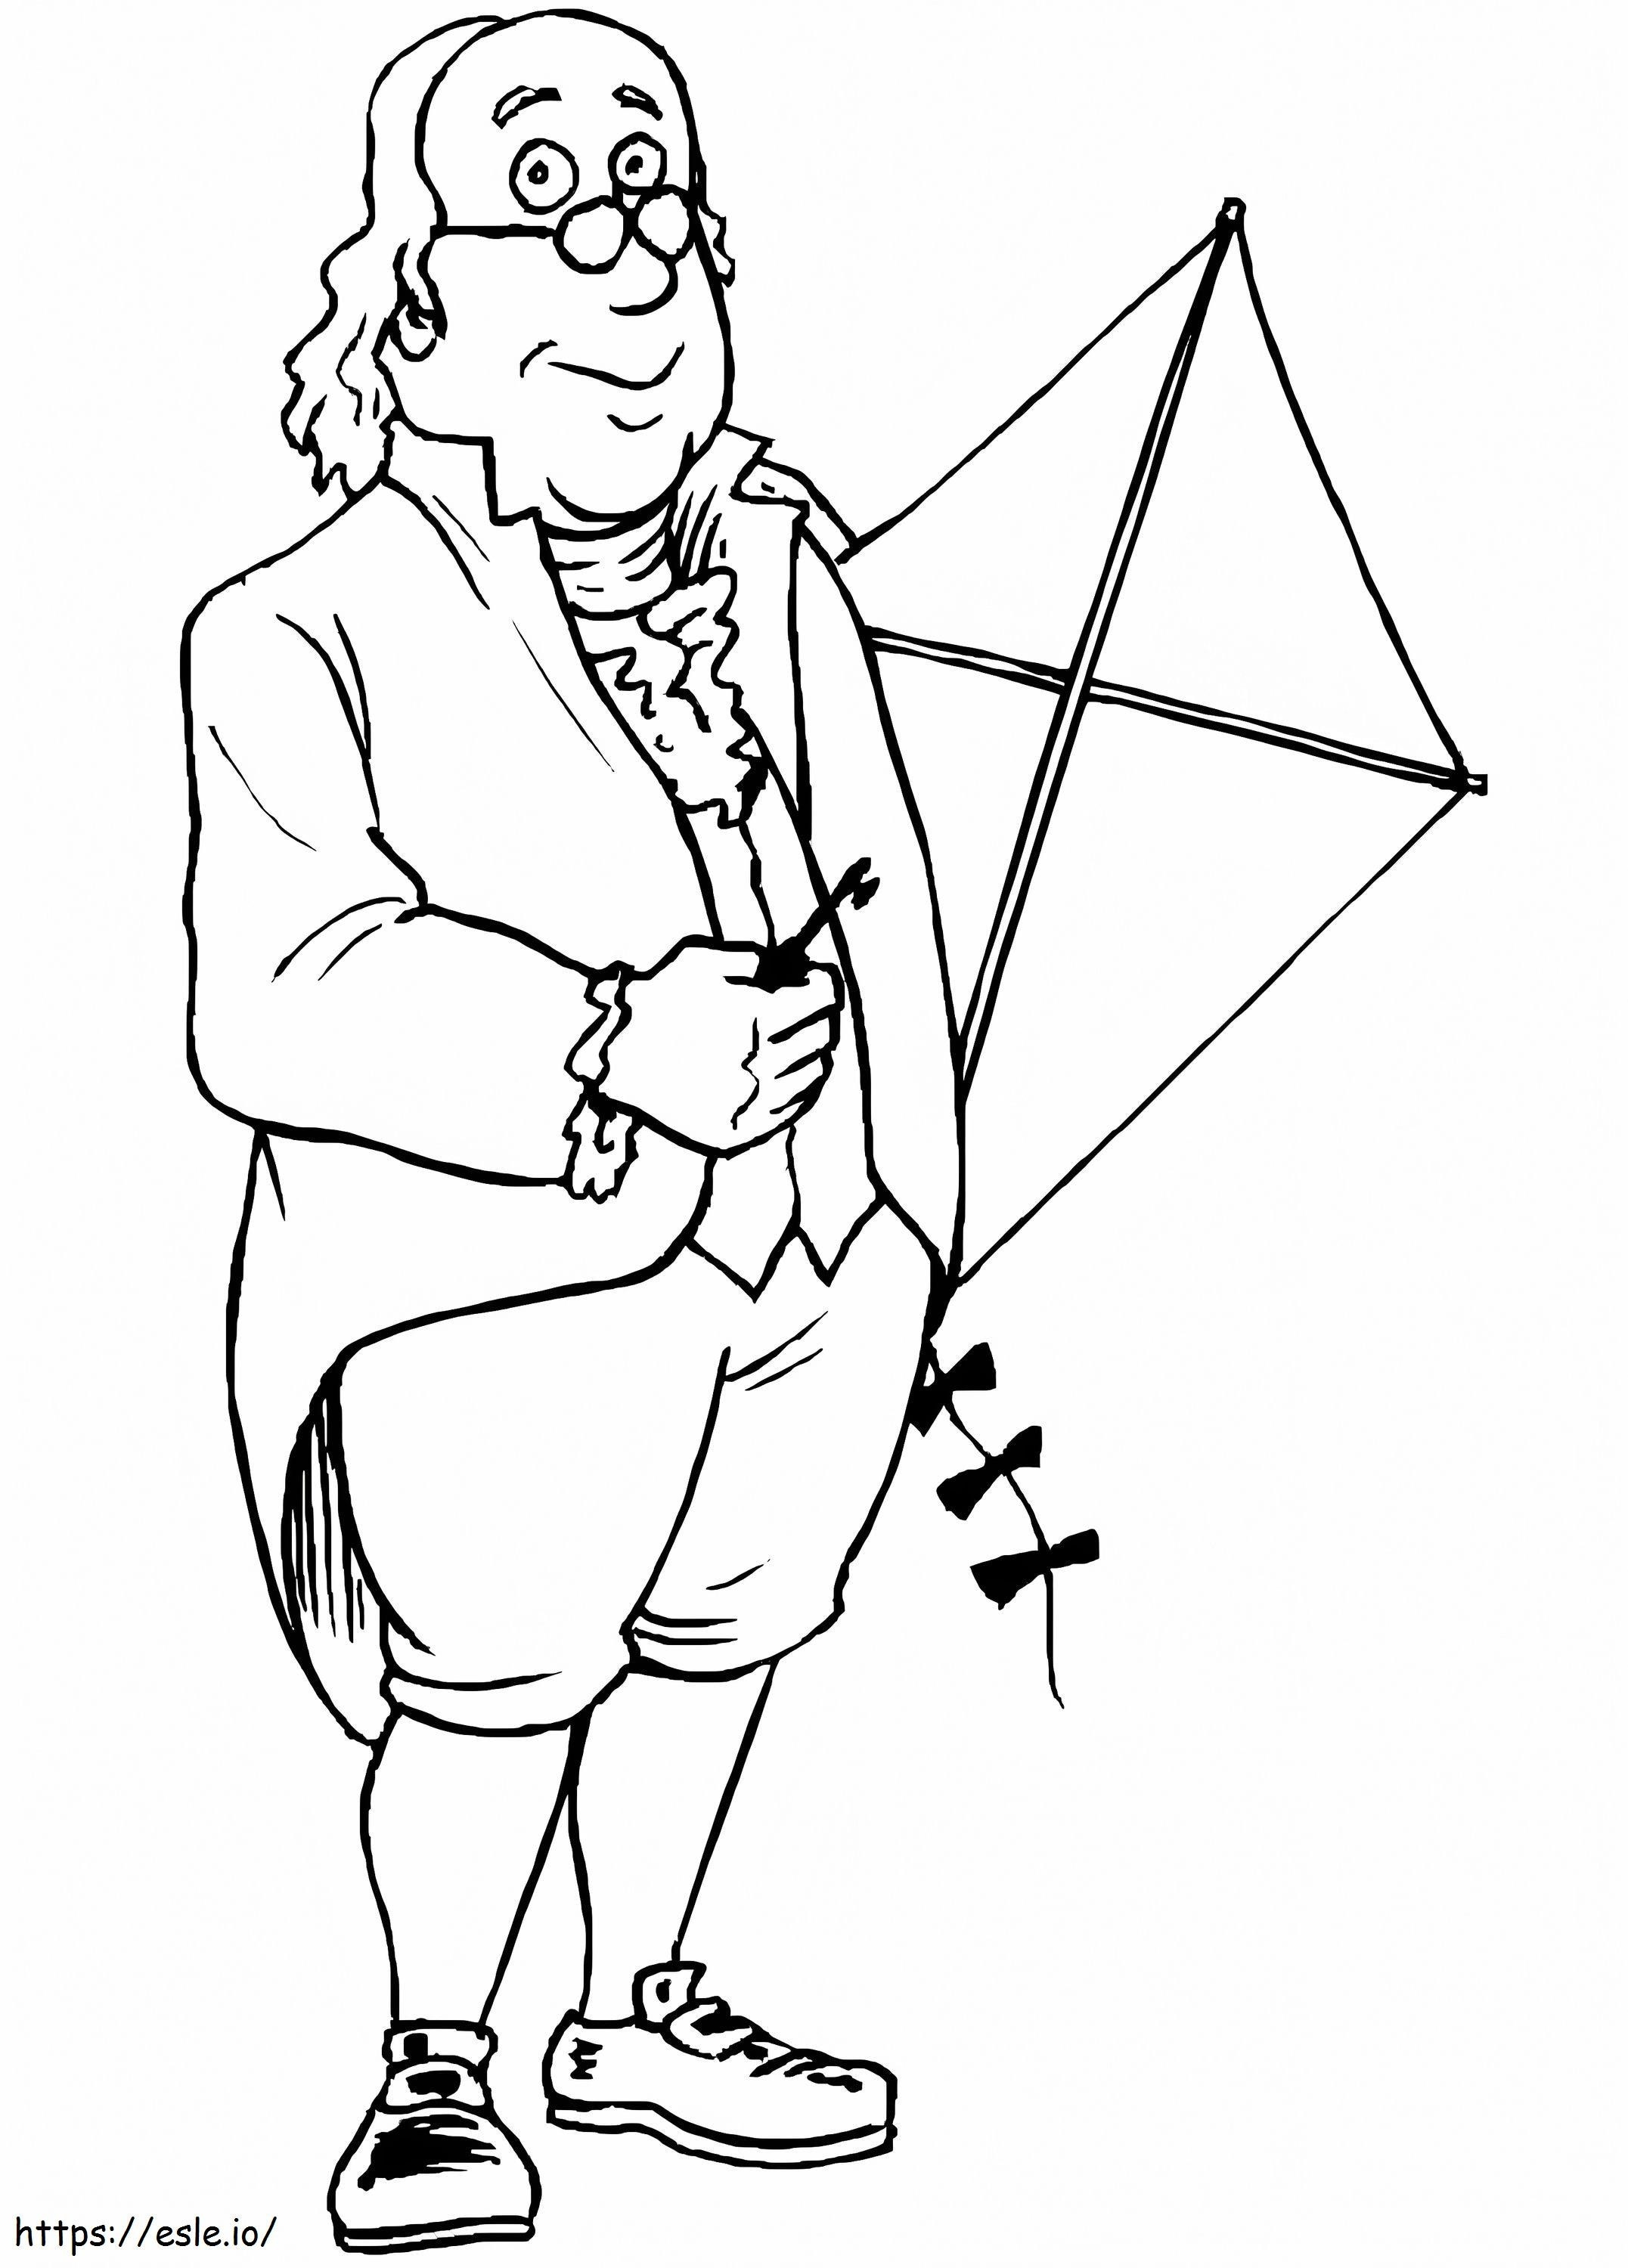 Coloriage Benjamin Franklin avec cerf-volant à imprimer dessin